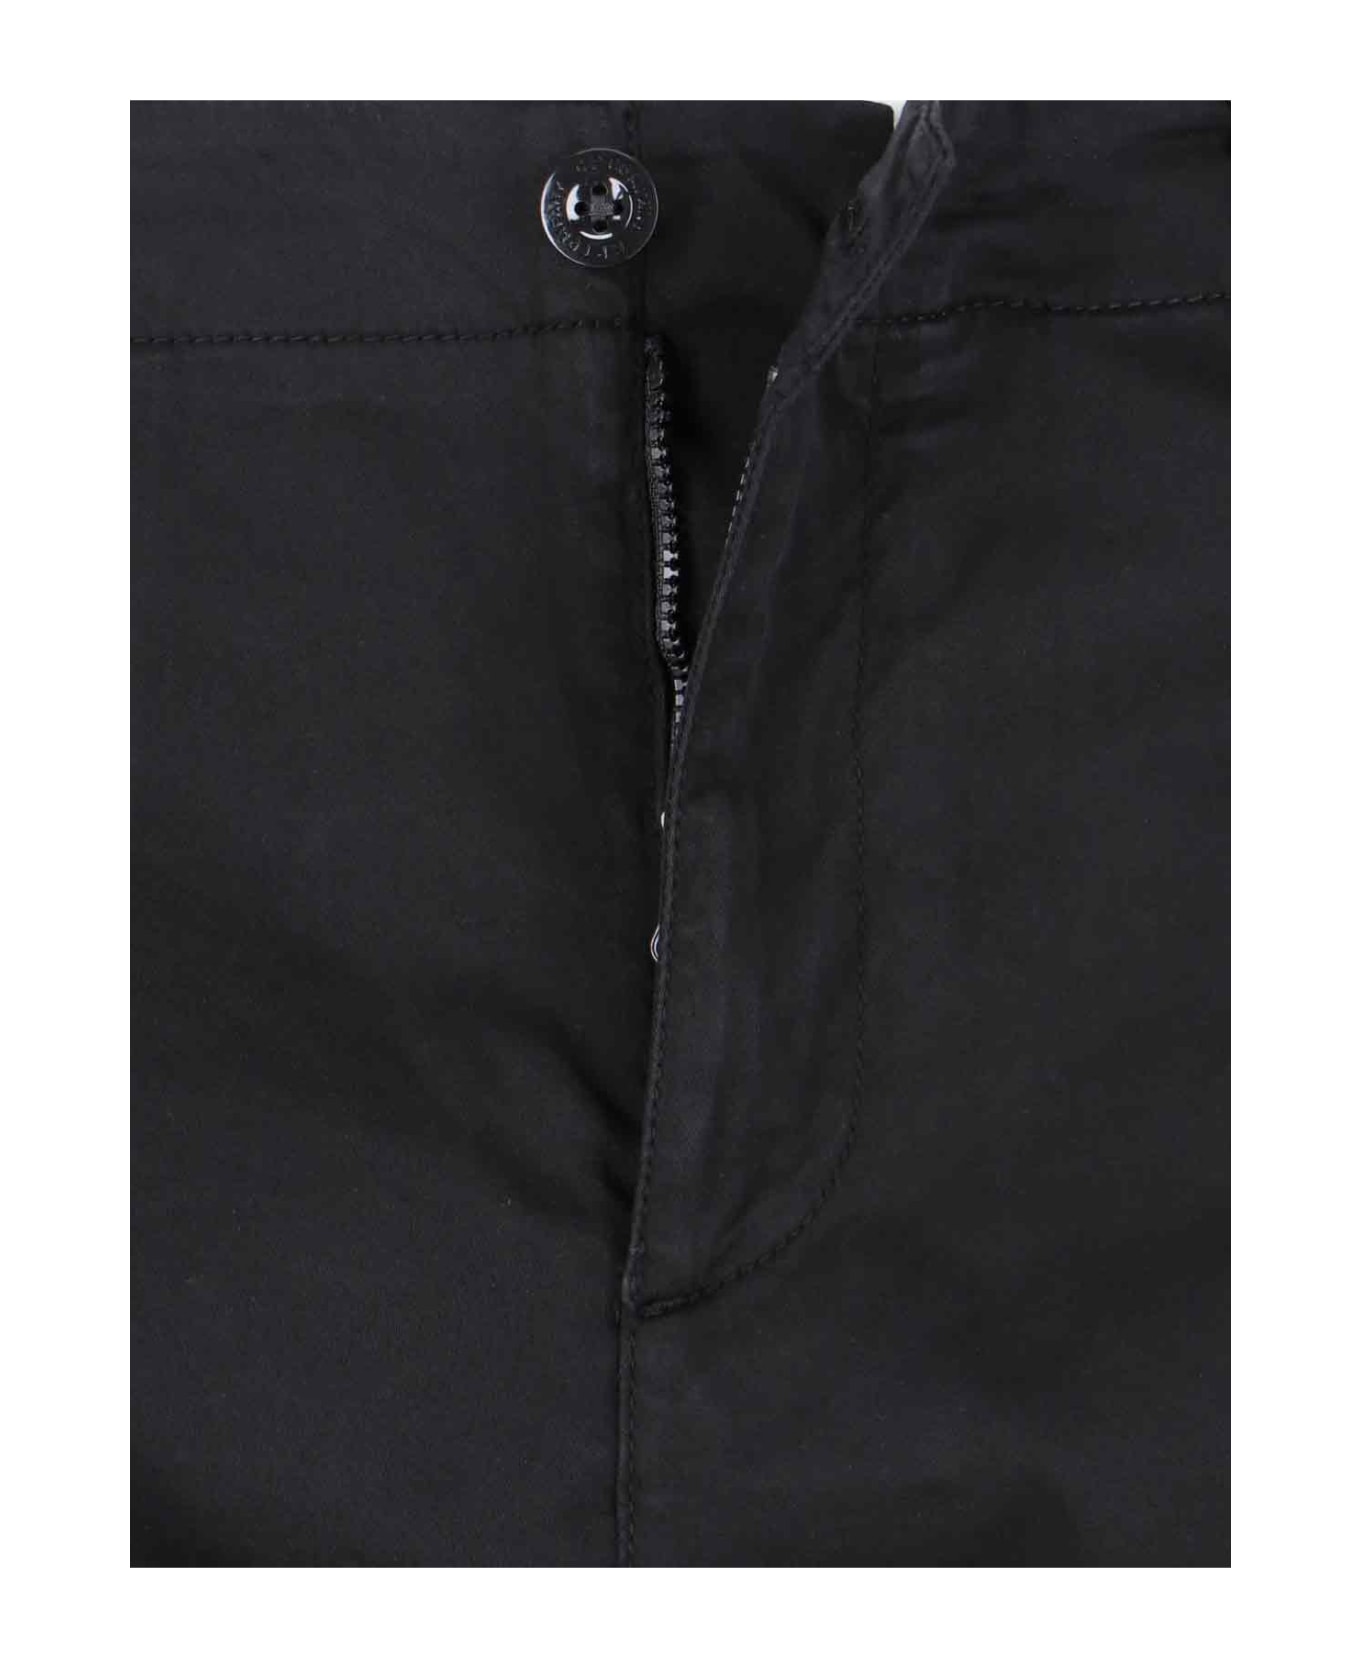 C.P. Company Cargo Shorts - Black ショートパンツ